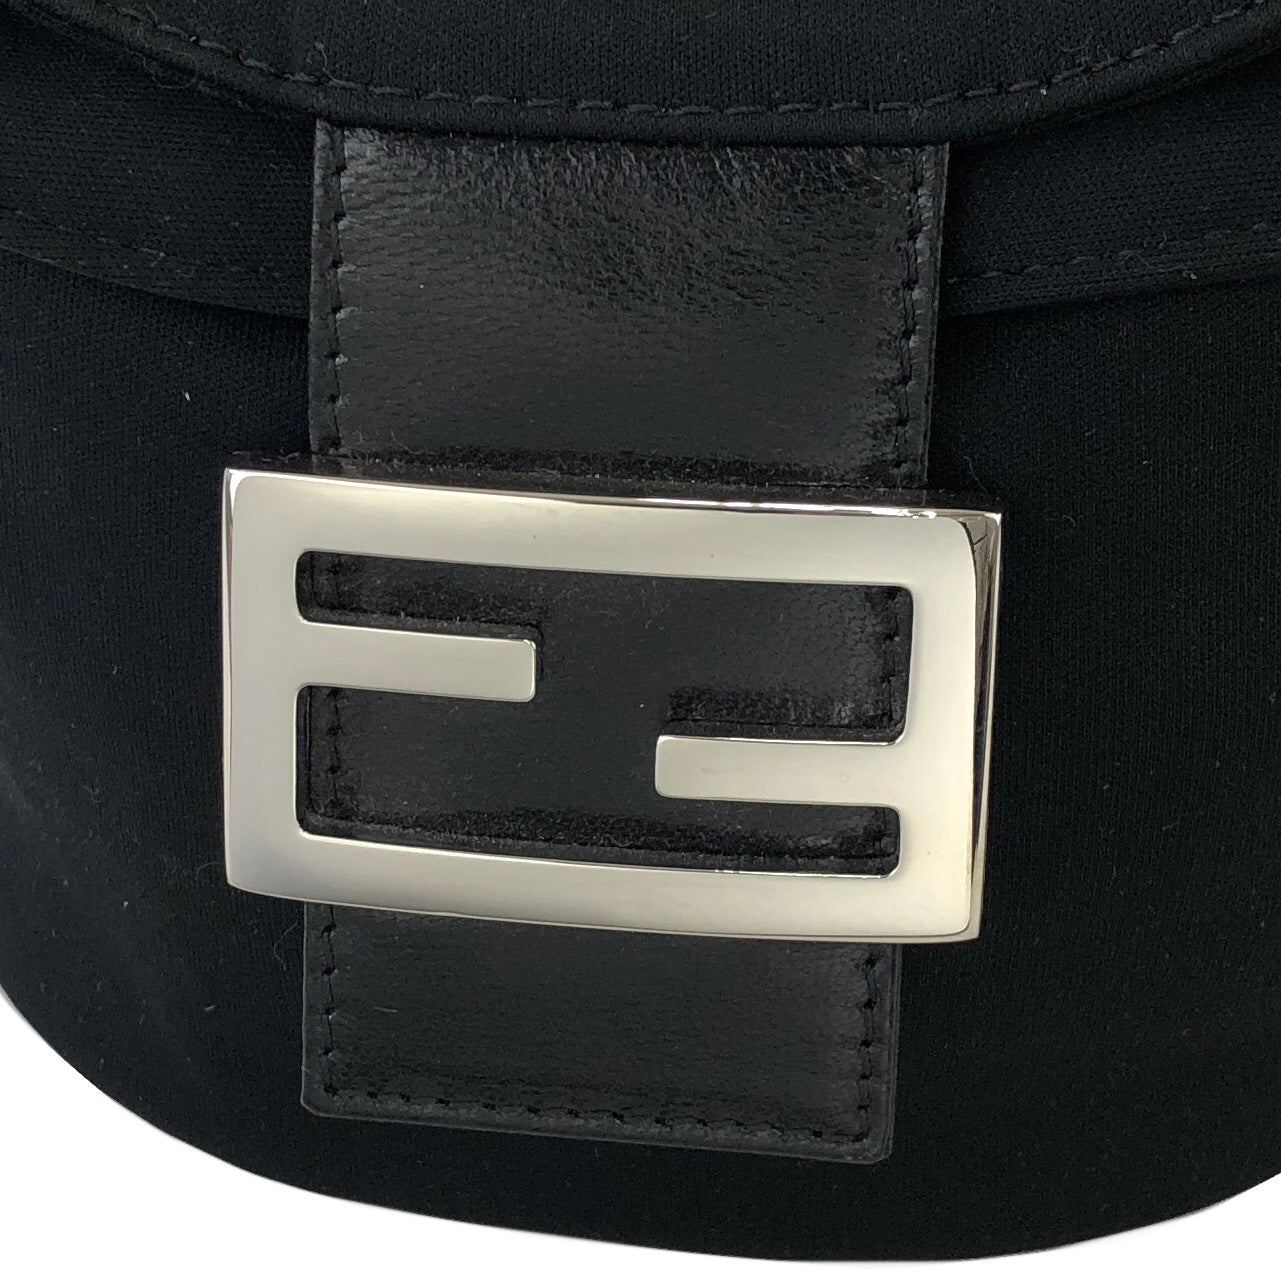 FENDI - Baguette leather mini bag